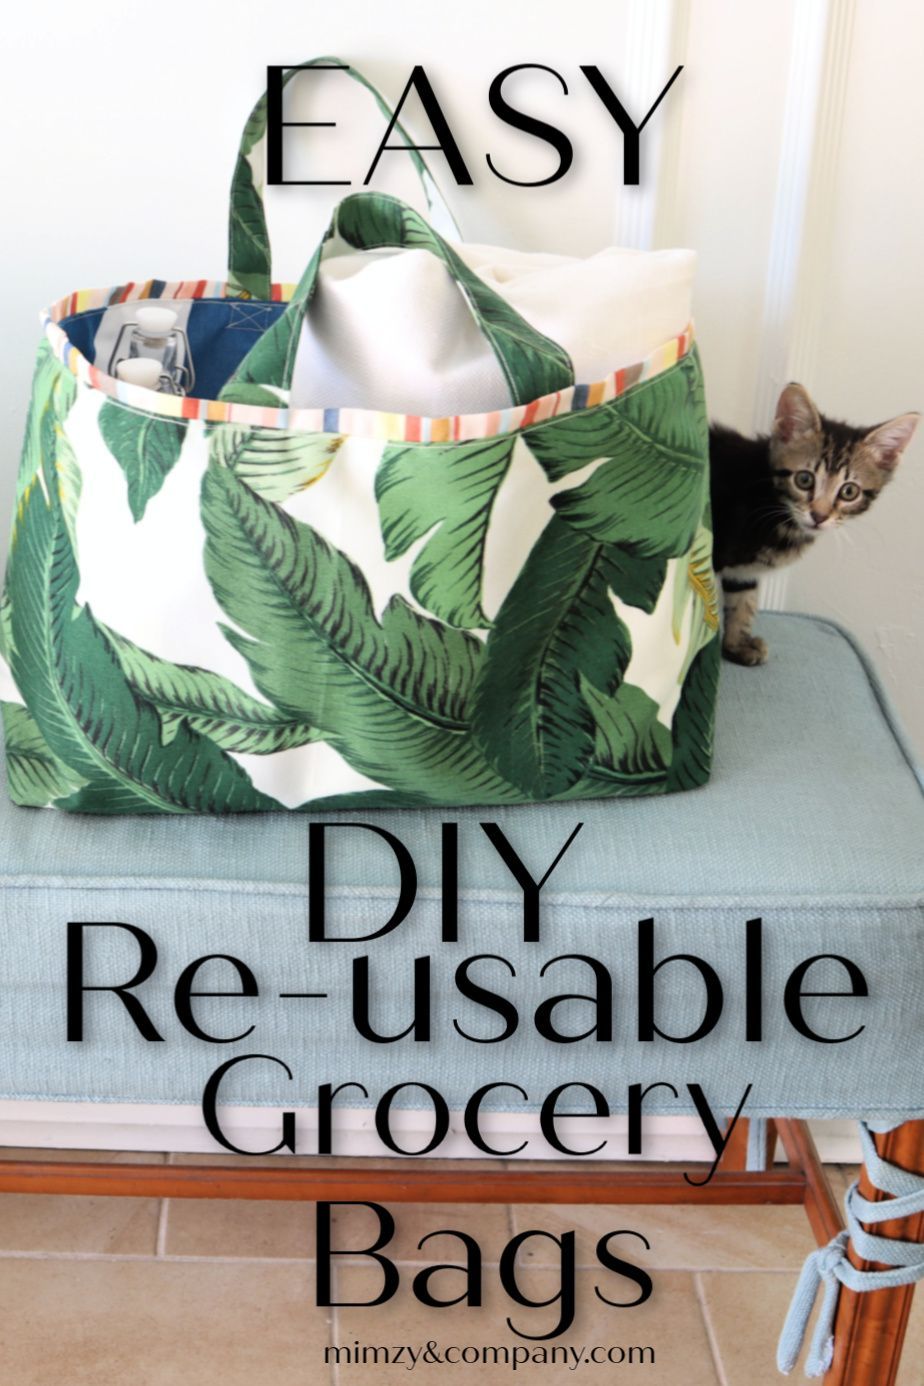 DIY re-usable grocery bags • mimzy & company -   19 diy Bag decoration ideas